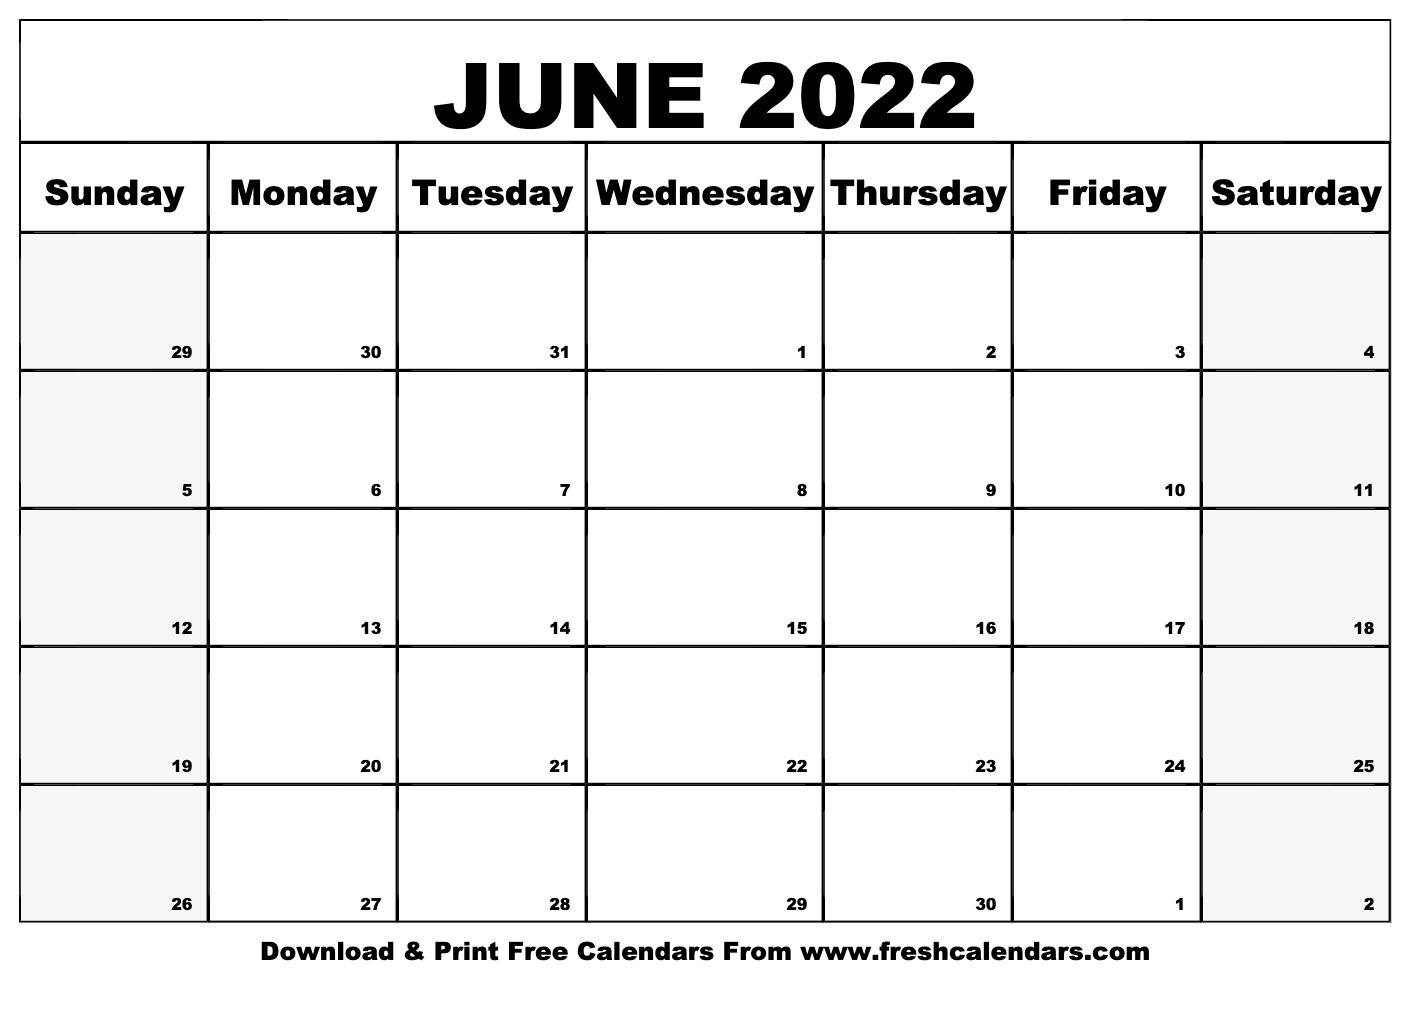 Get Calendar January Through June 2022